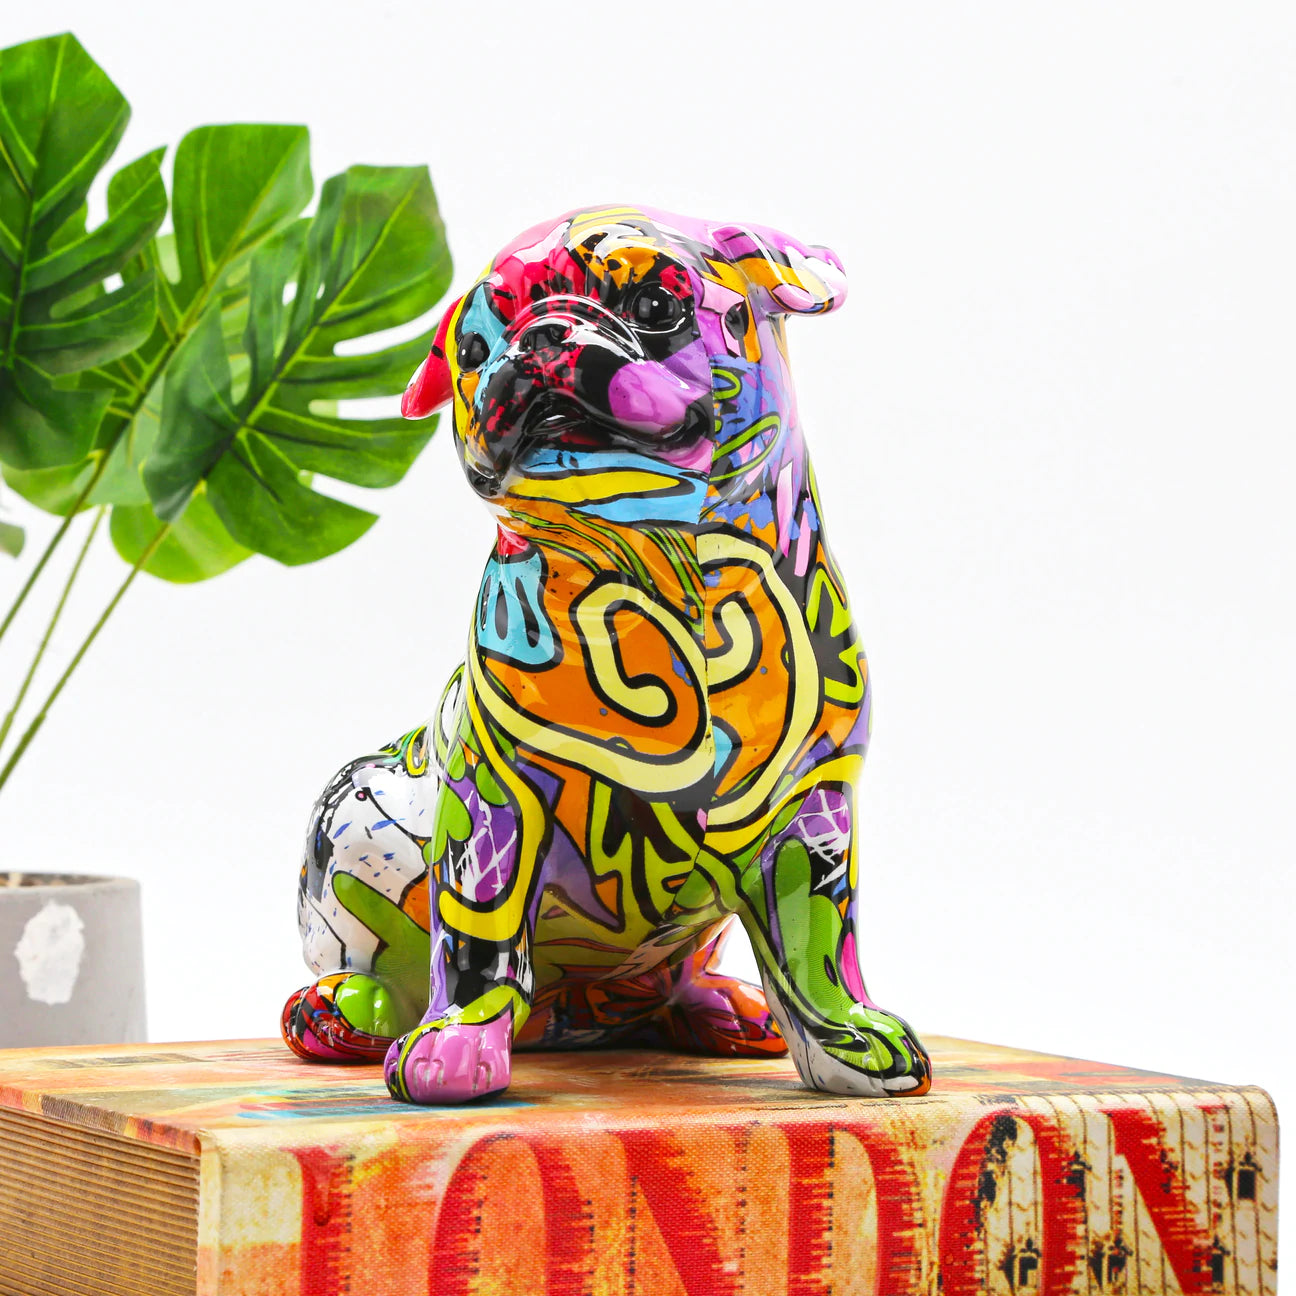  Colorful French Bulldog Statue,Creative Graffiti Art